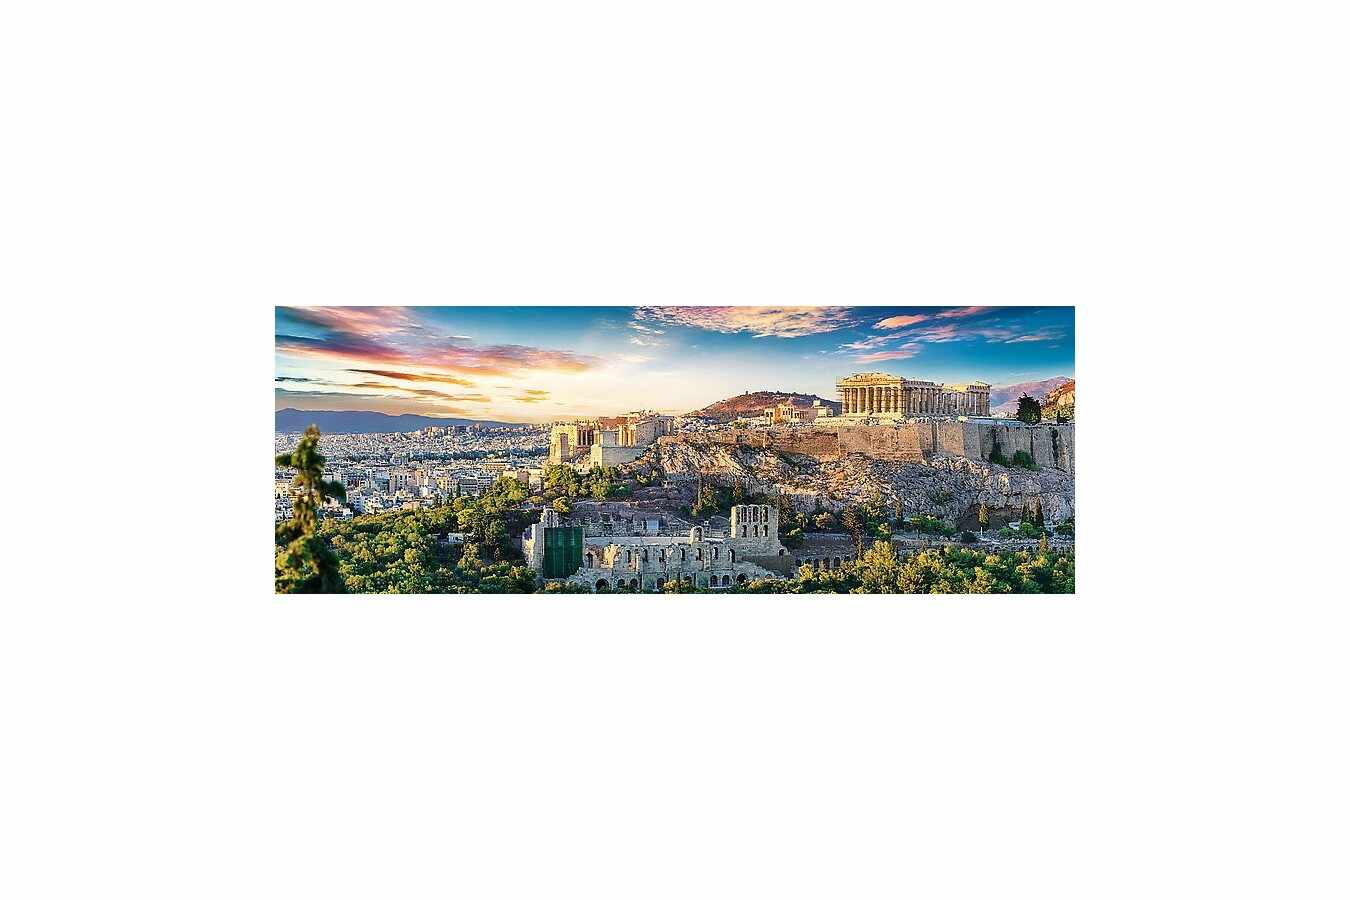 Puzzle panoramic Trefl - Acropolis, Athens, 500 piese (29503)